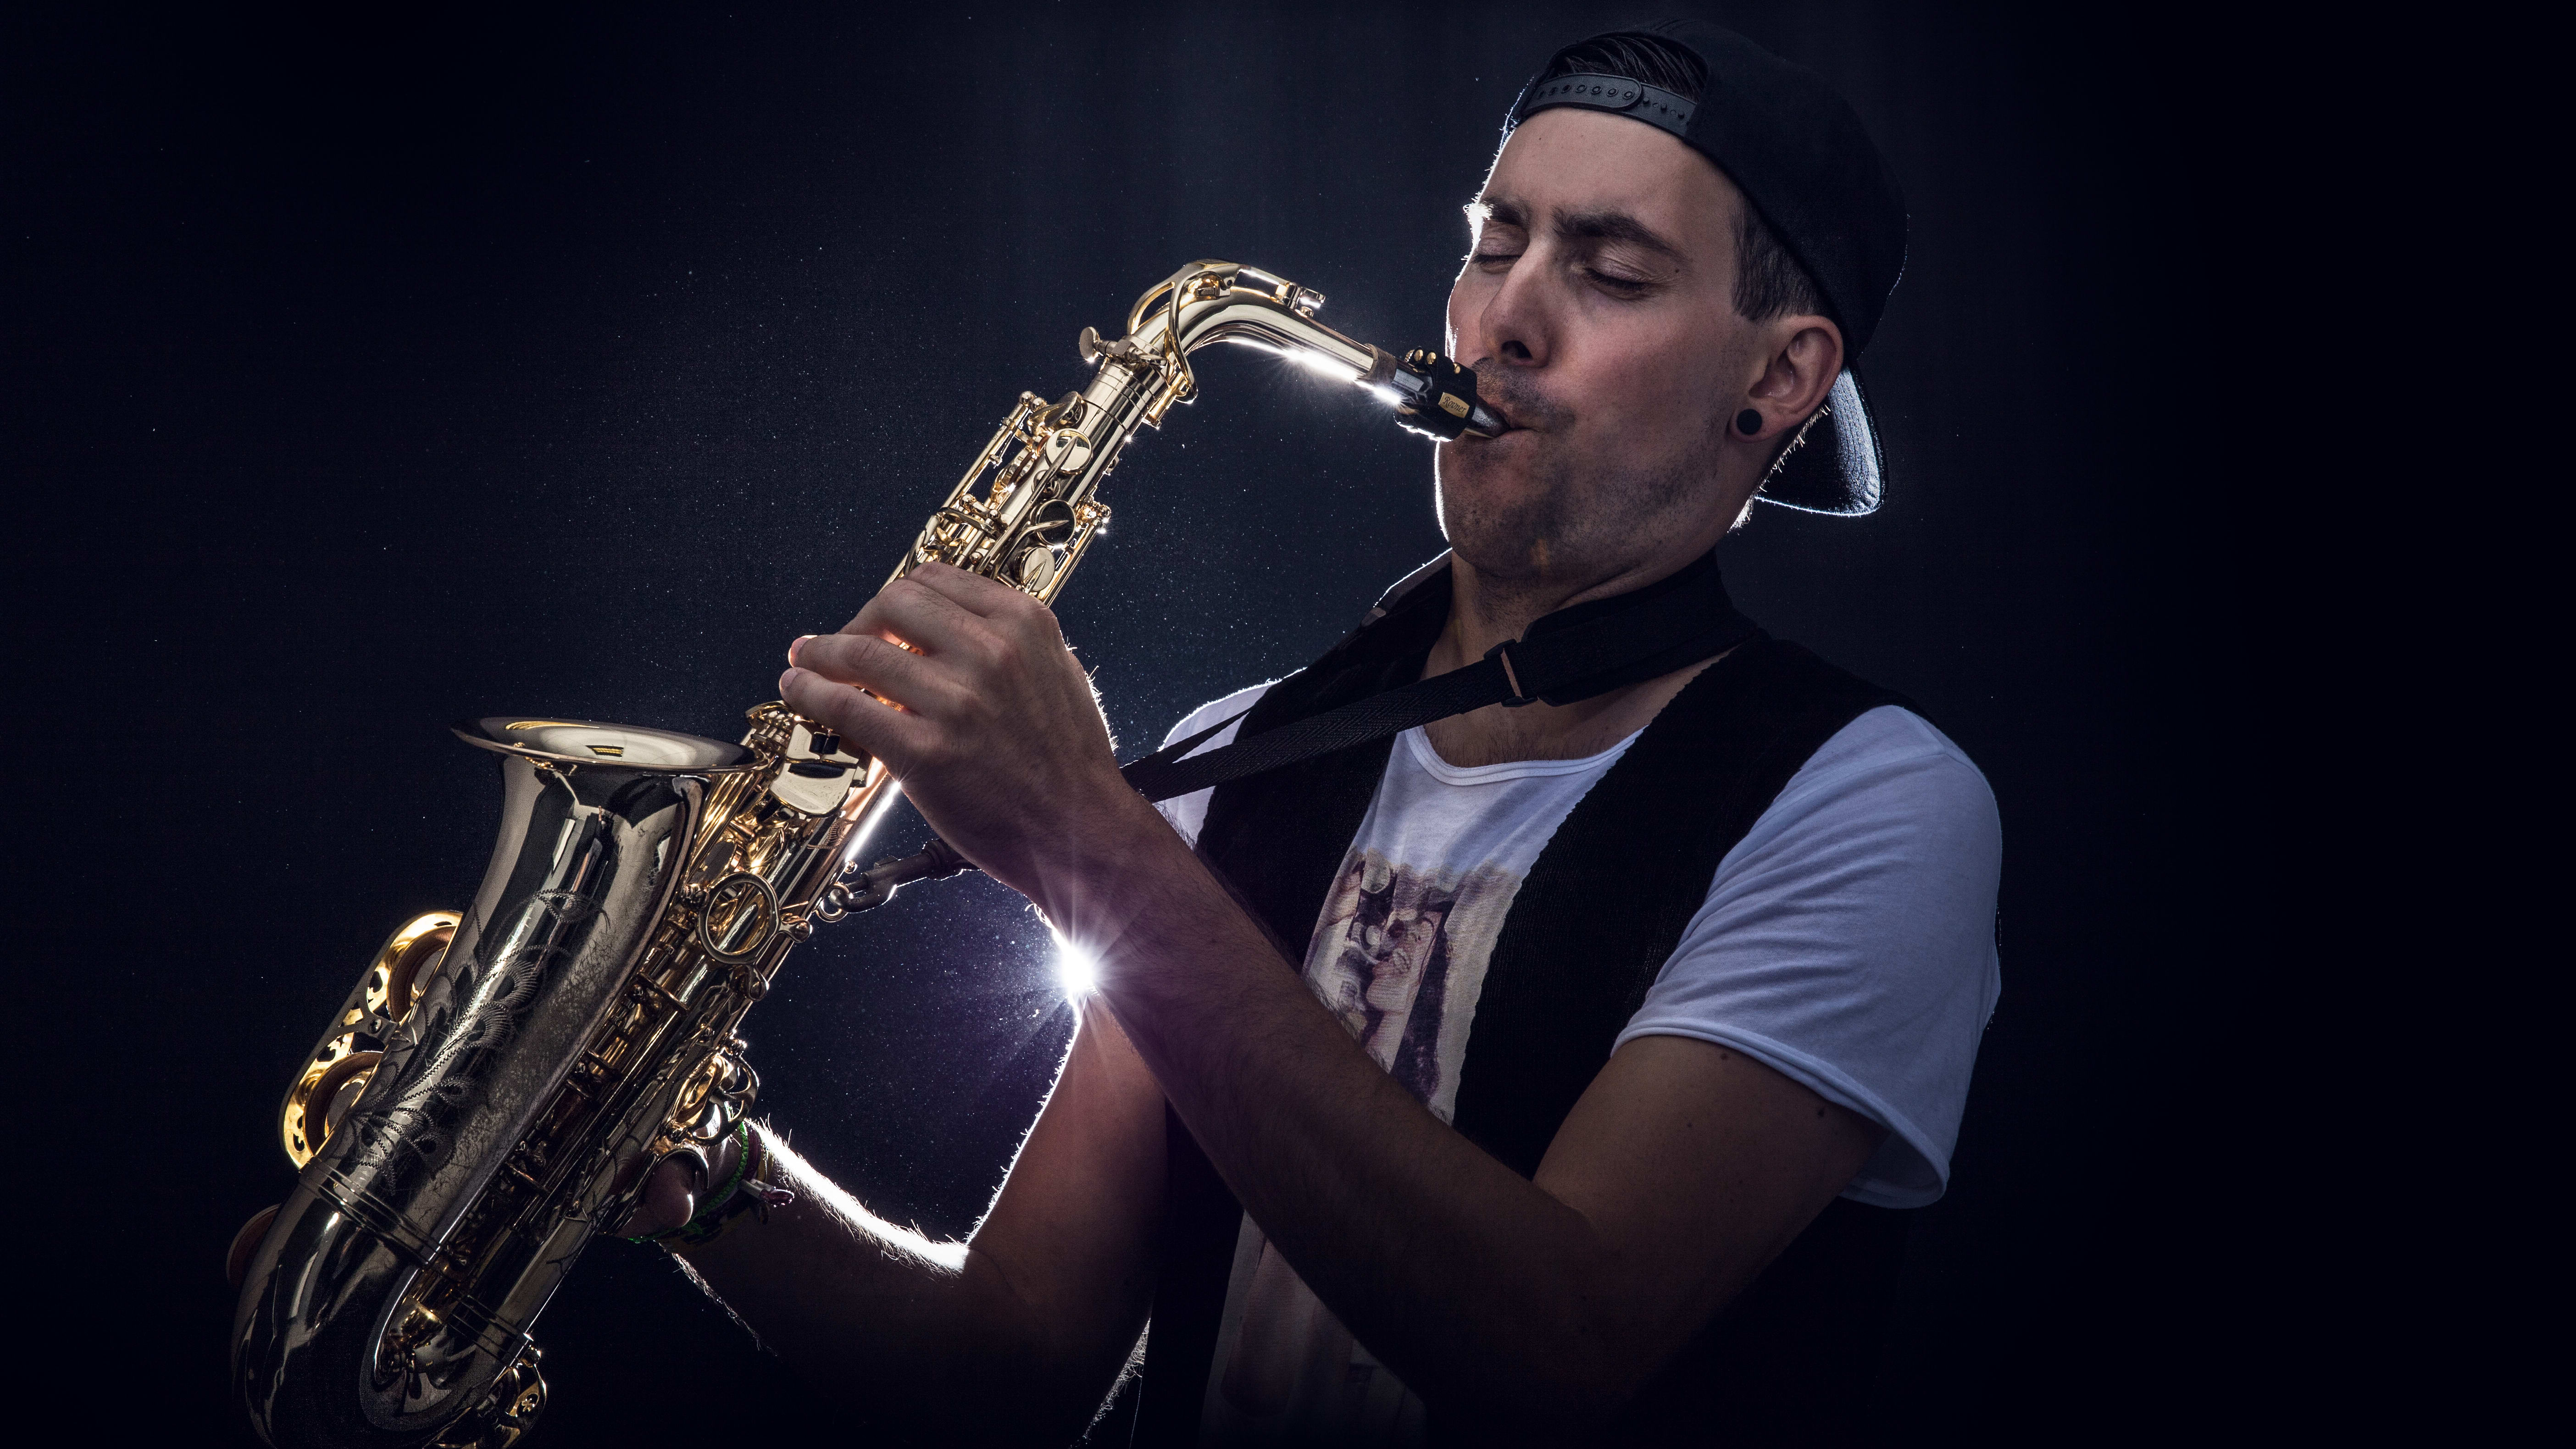 Saxophonist Marc Spieler am Saxophon